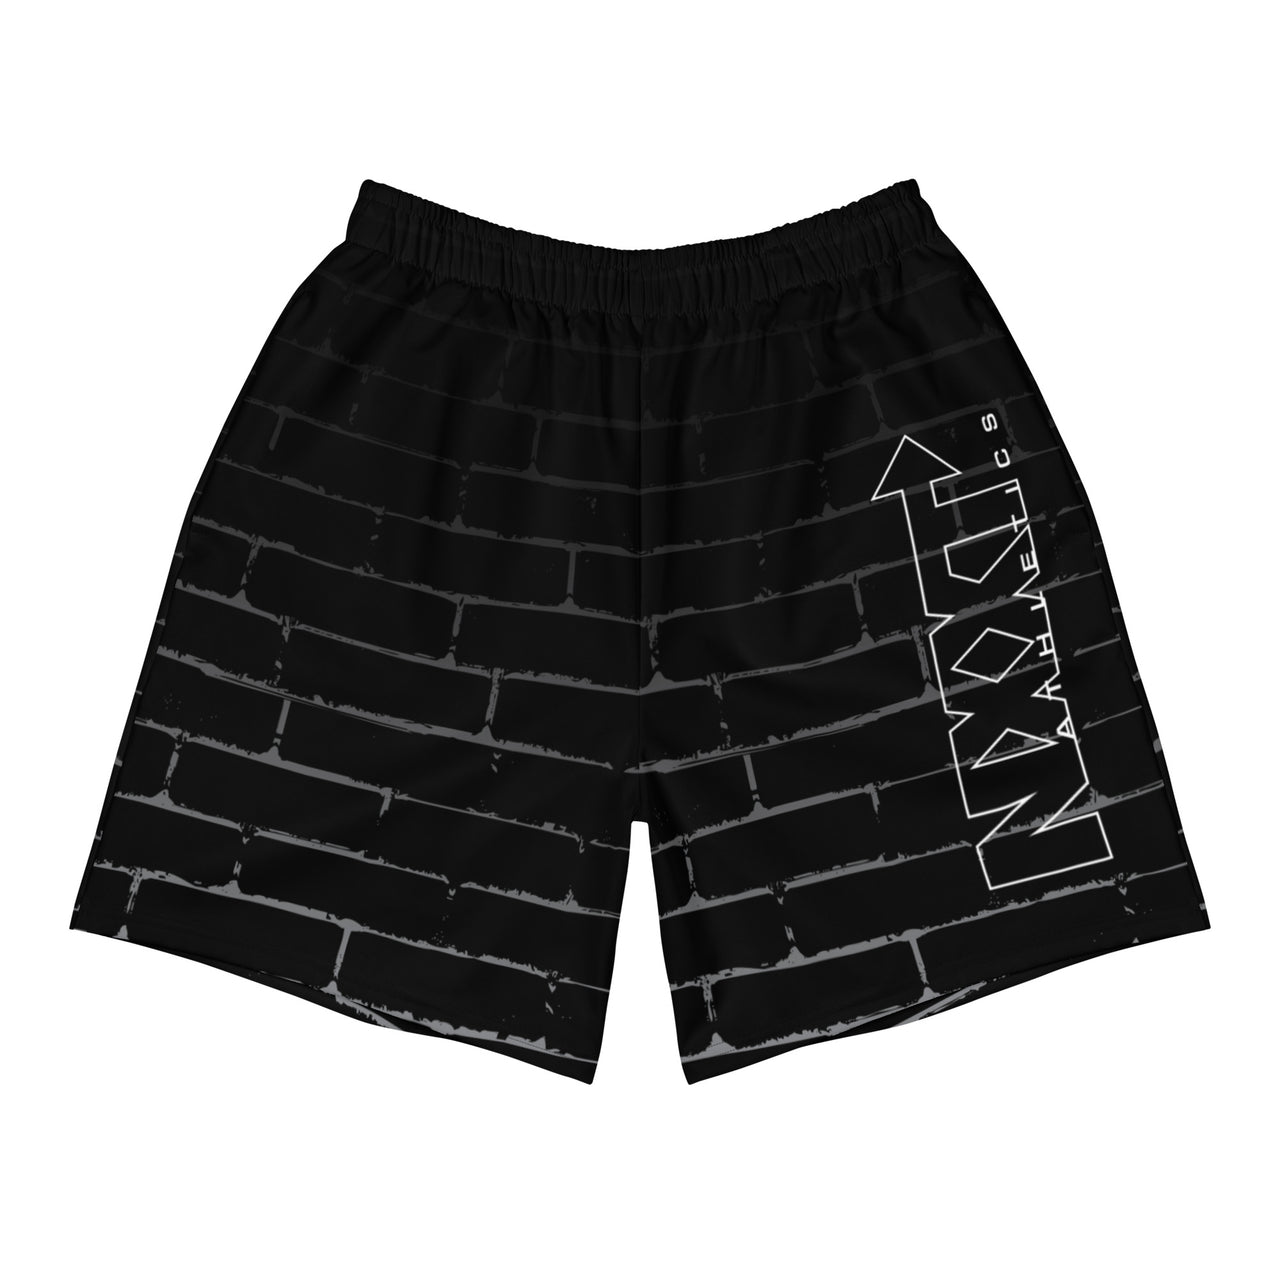 NXXT Athletics Men's Recycled Athletic Shorts - Black/White - Shady Lion Coffee Co.